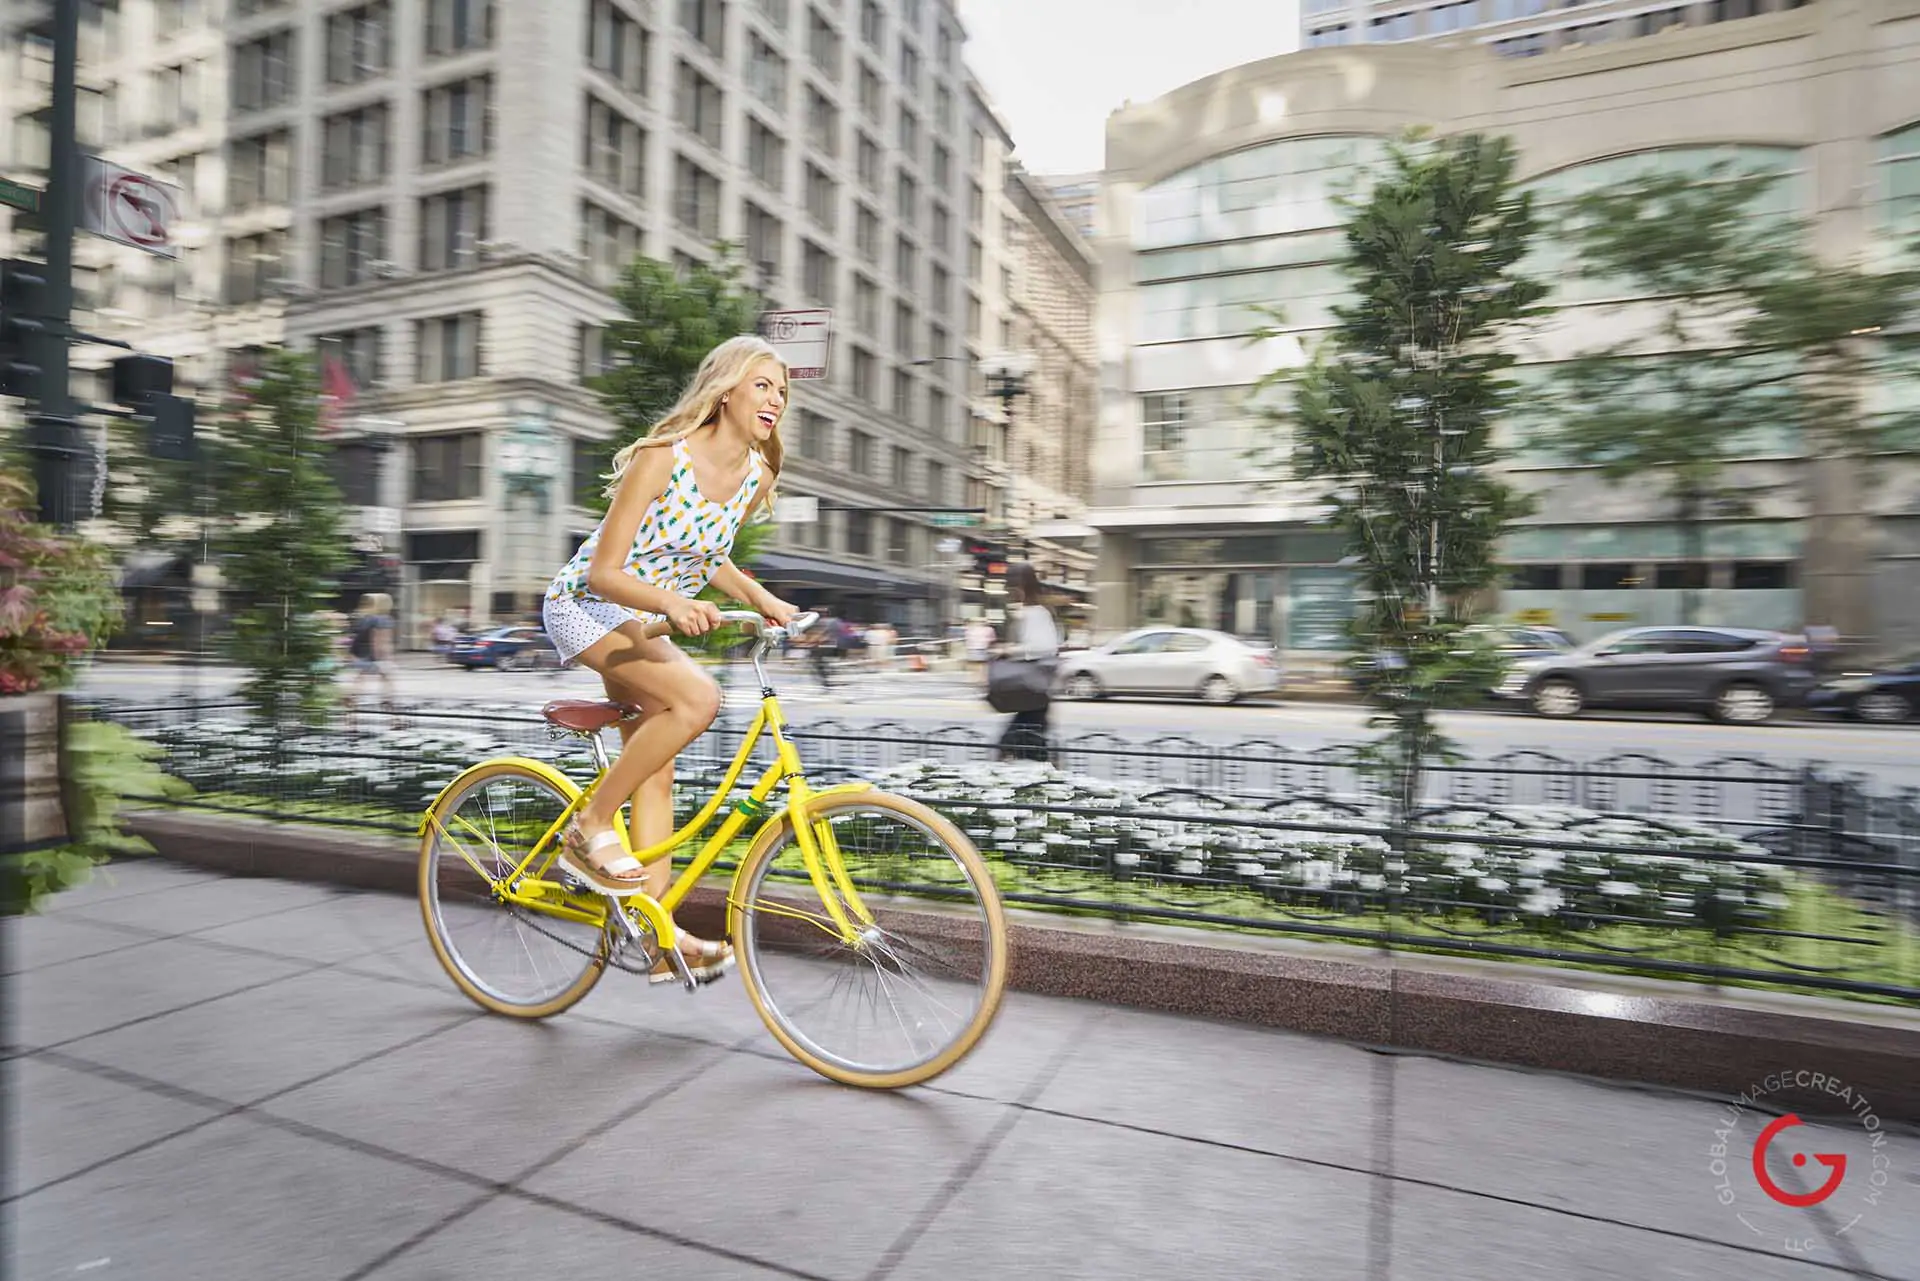 Girl Rides Bike Downtown - Photographer Lifestyle Photography Wardrobe Stylist